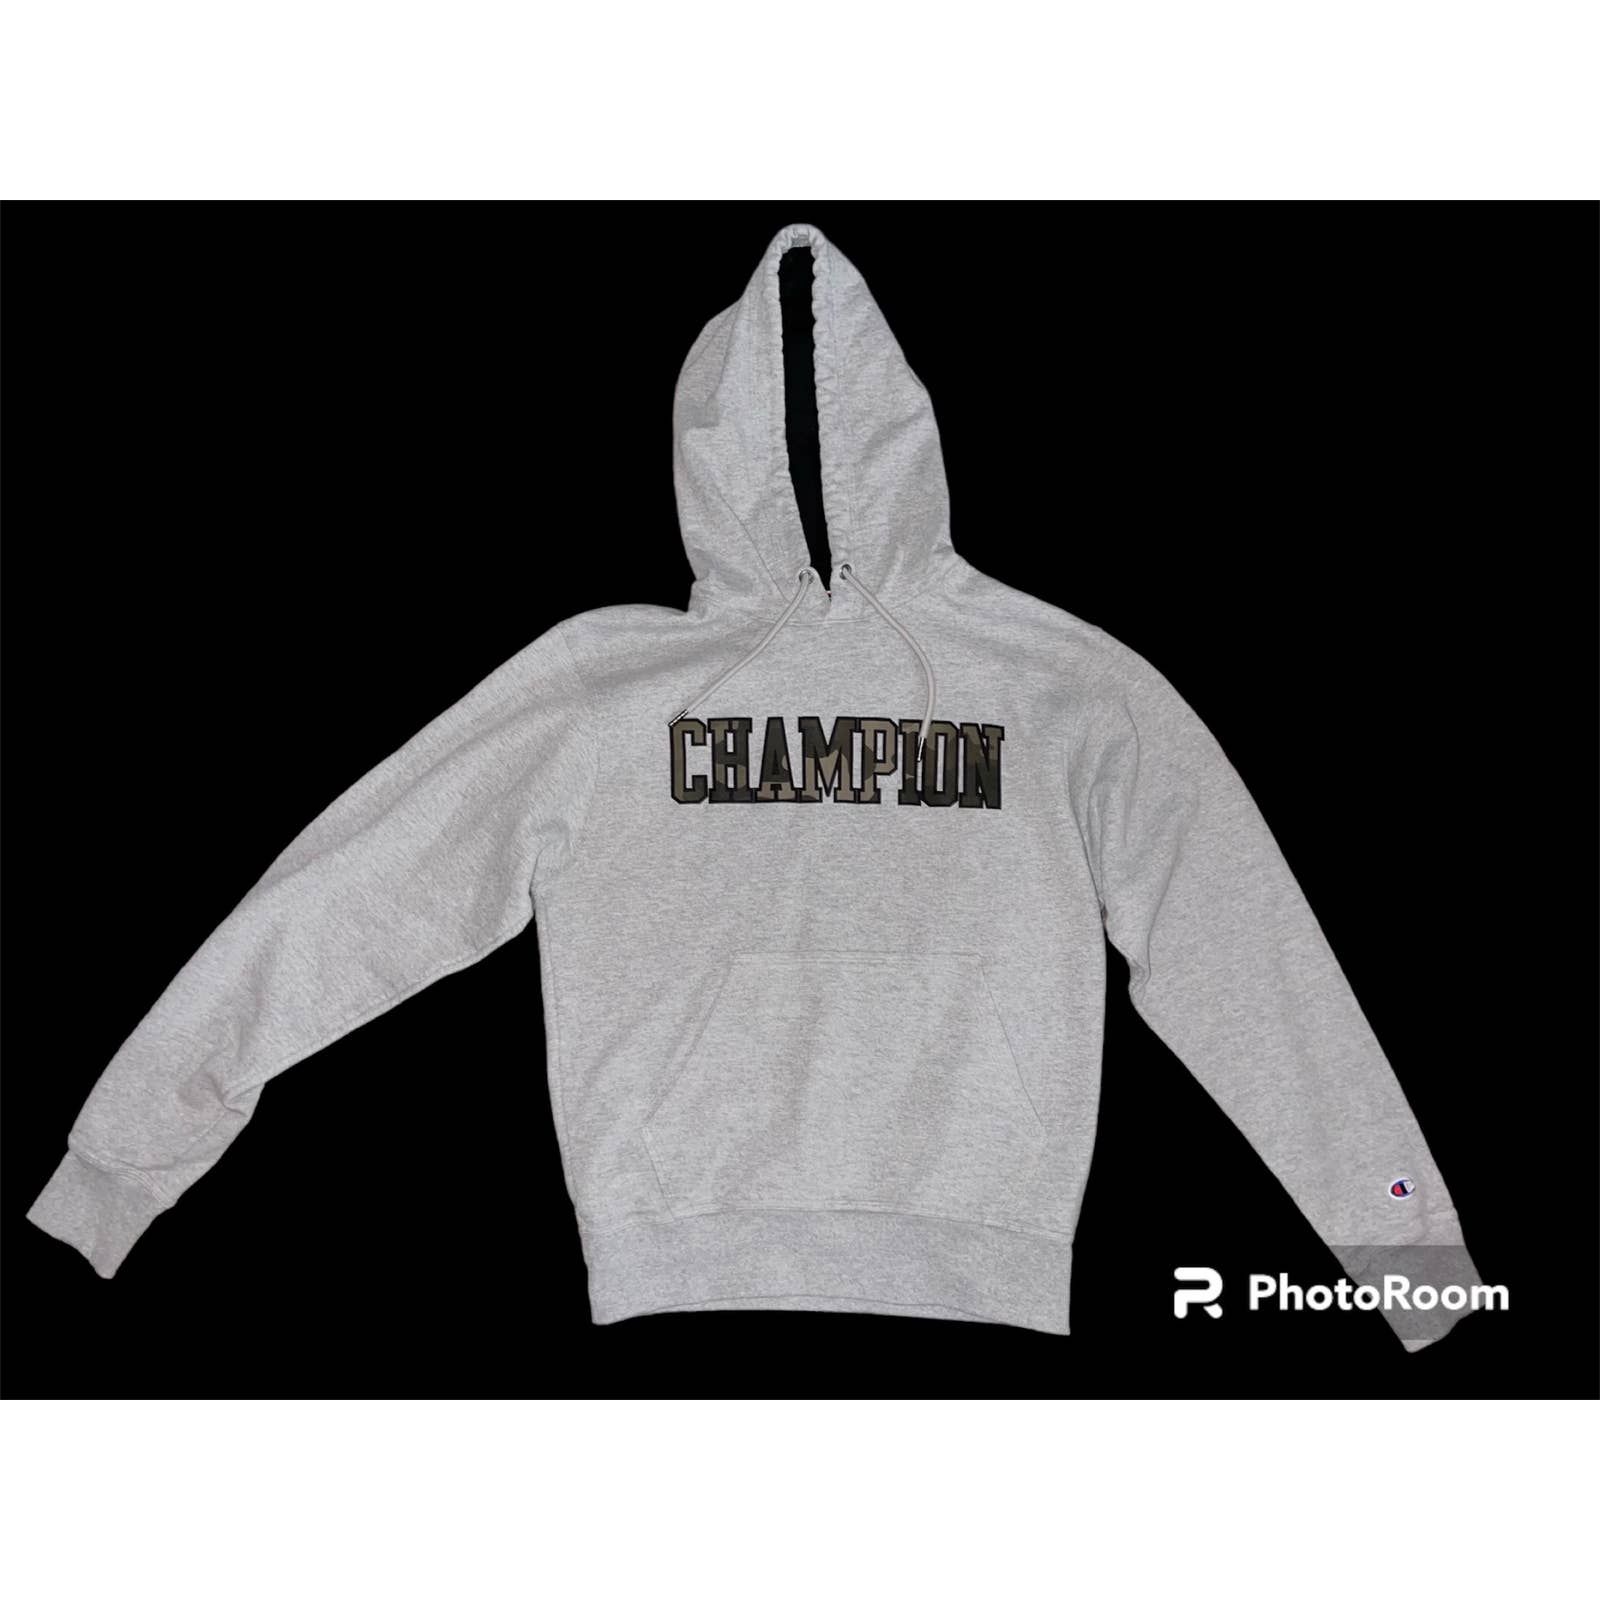 Champion Champion Men's Hoodie Sweatshirt Gym Camouflage Size US S / EU 44-46 / 1 - 1 Preview